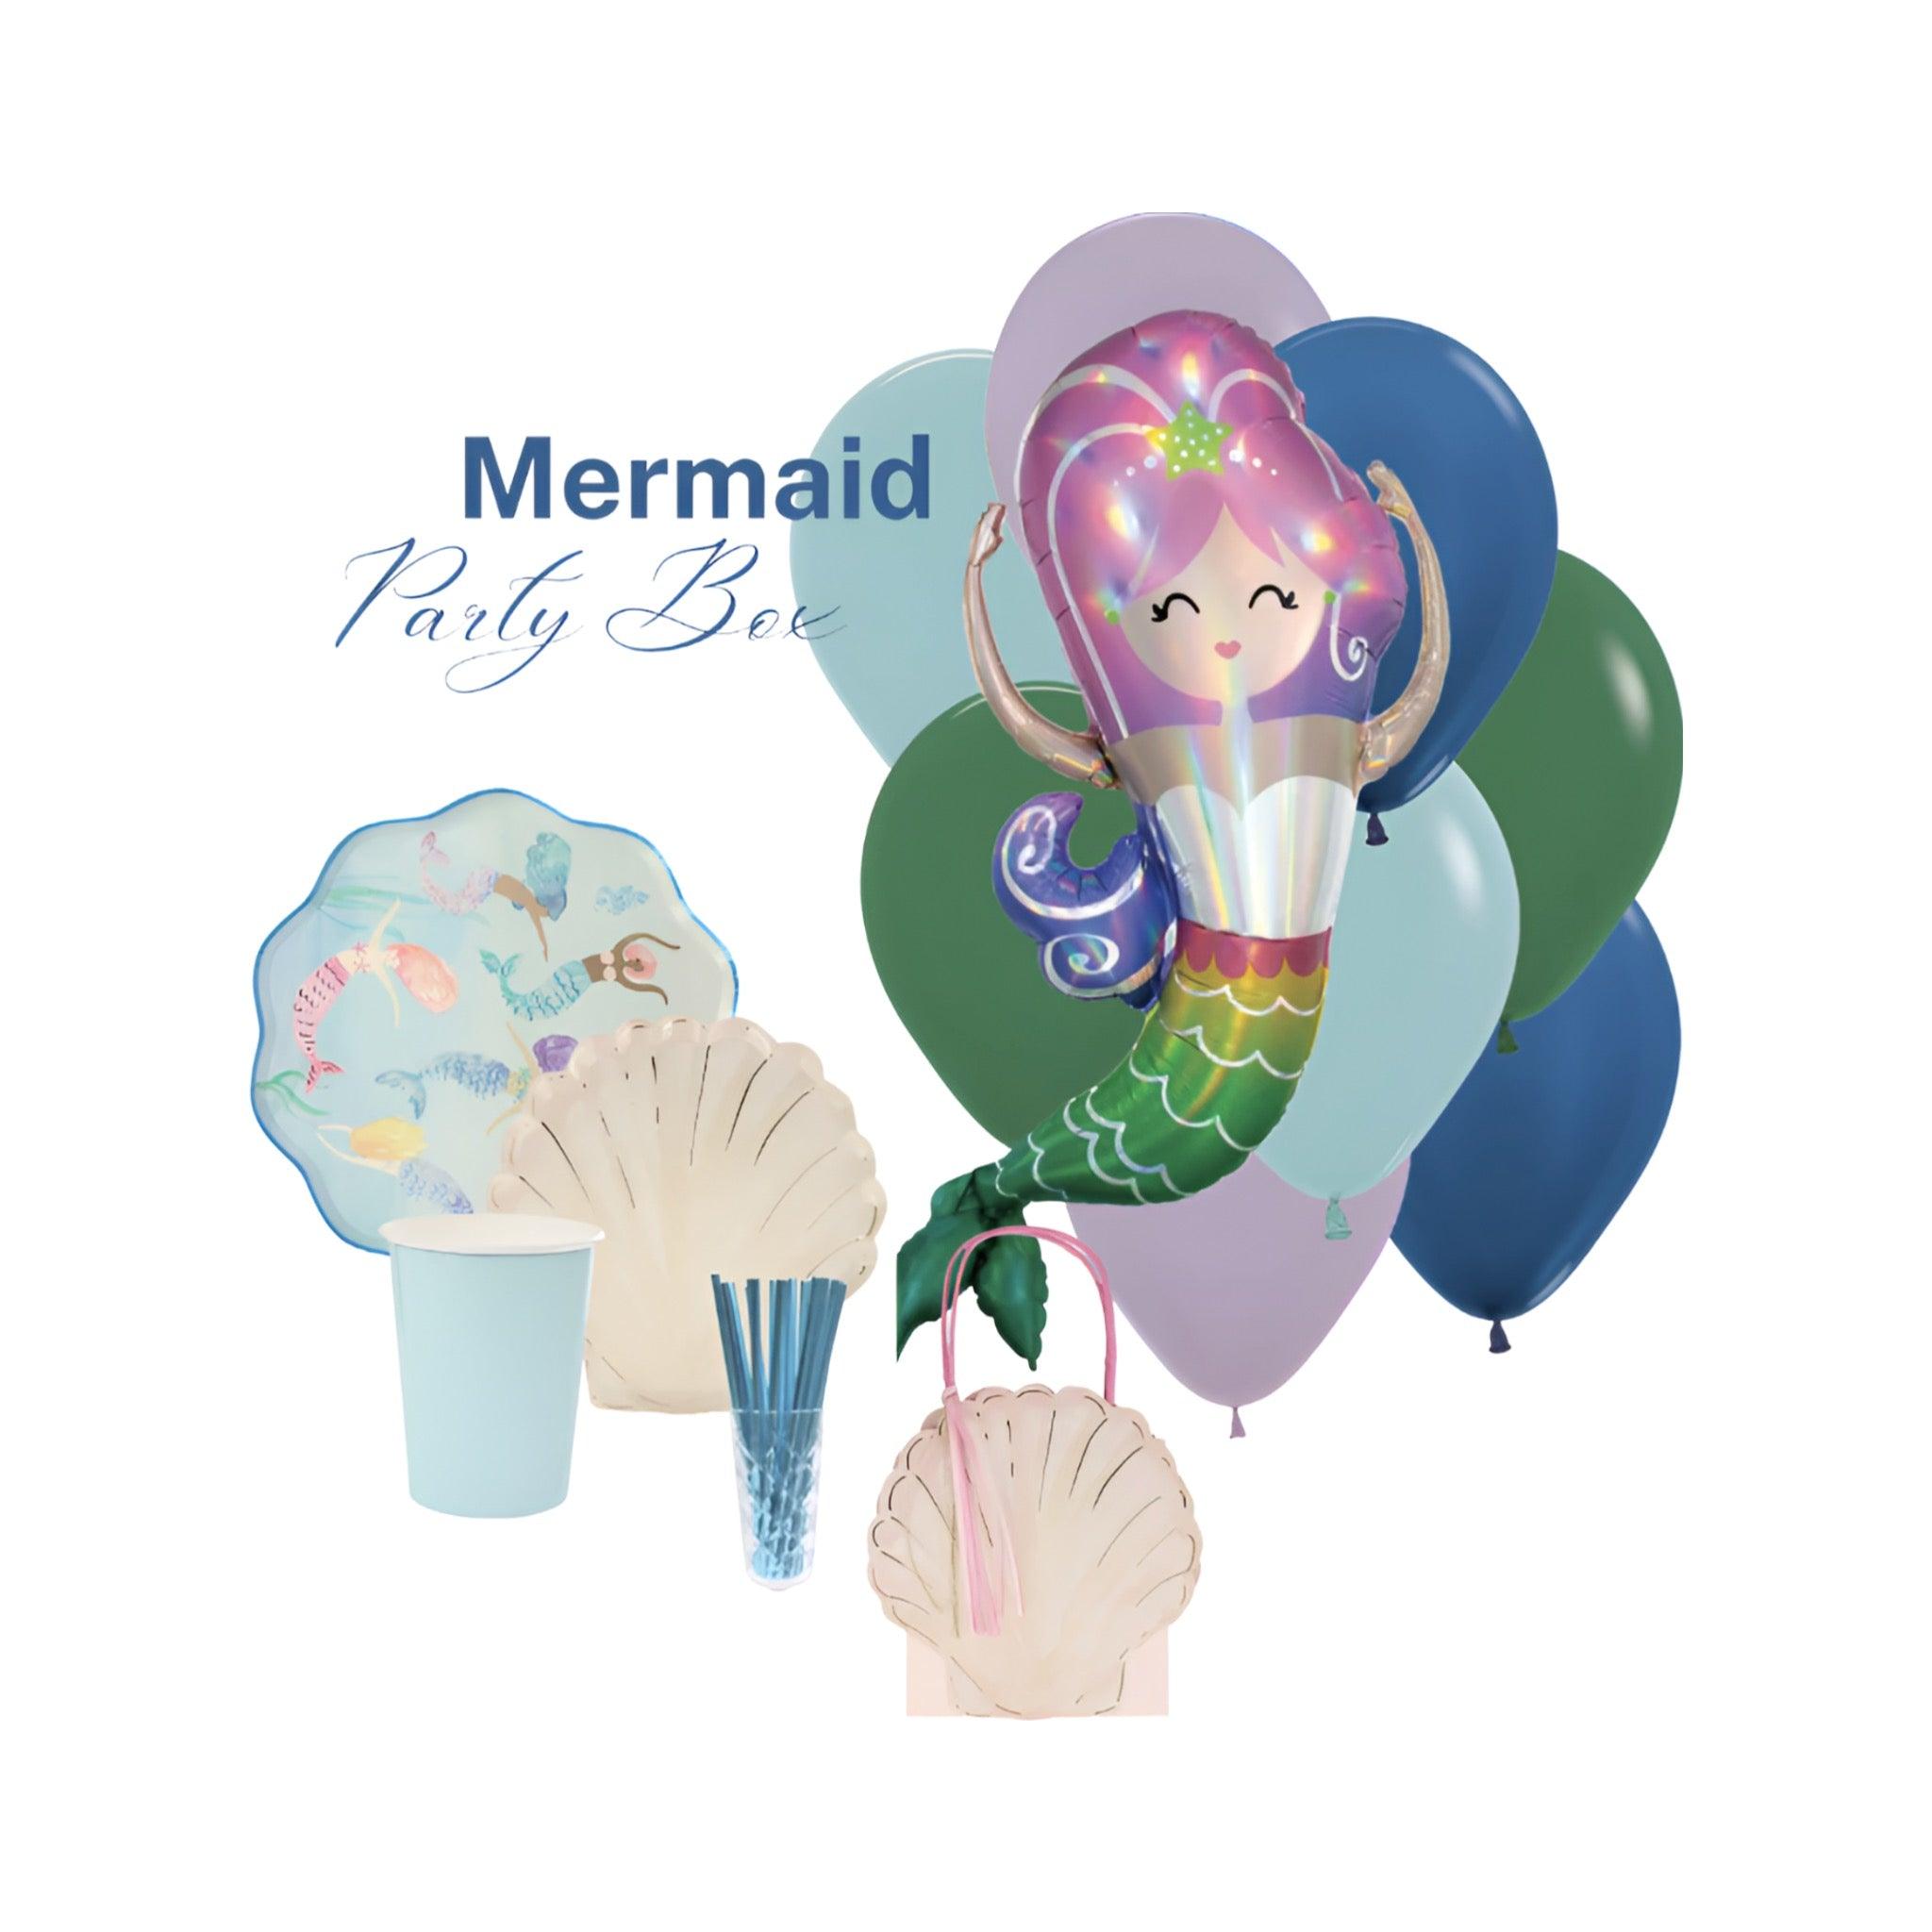 Mermaid Party Box Including Balloons, Meri Meri Plates, Cups, Shell Party Bags & Straws.